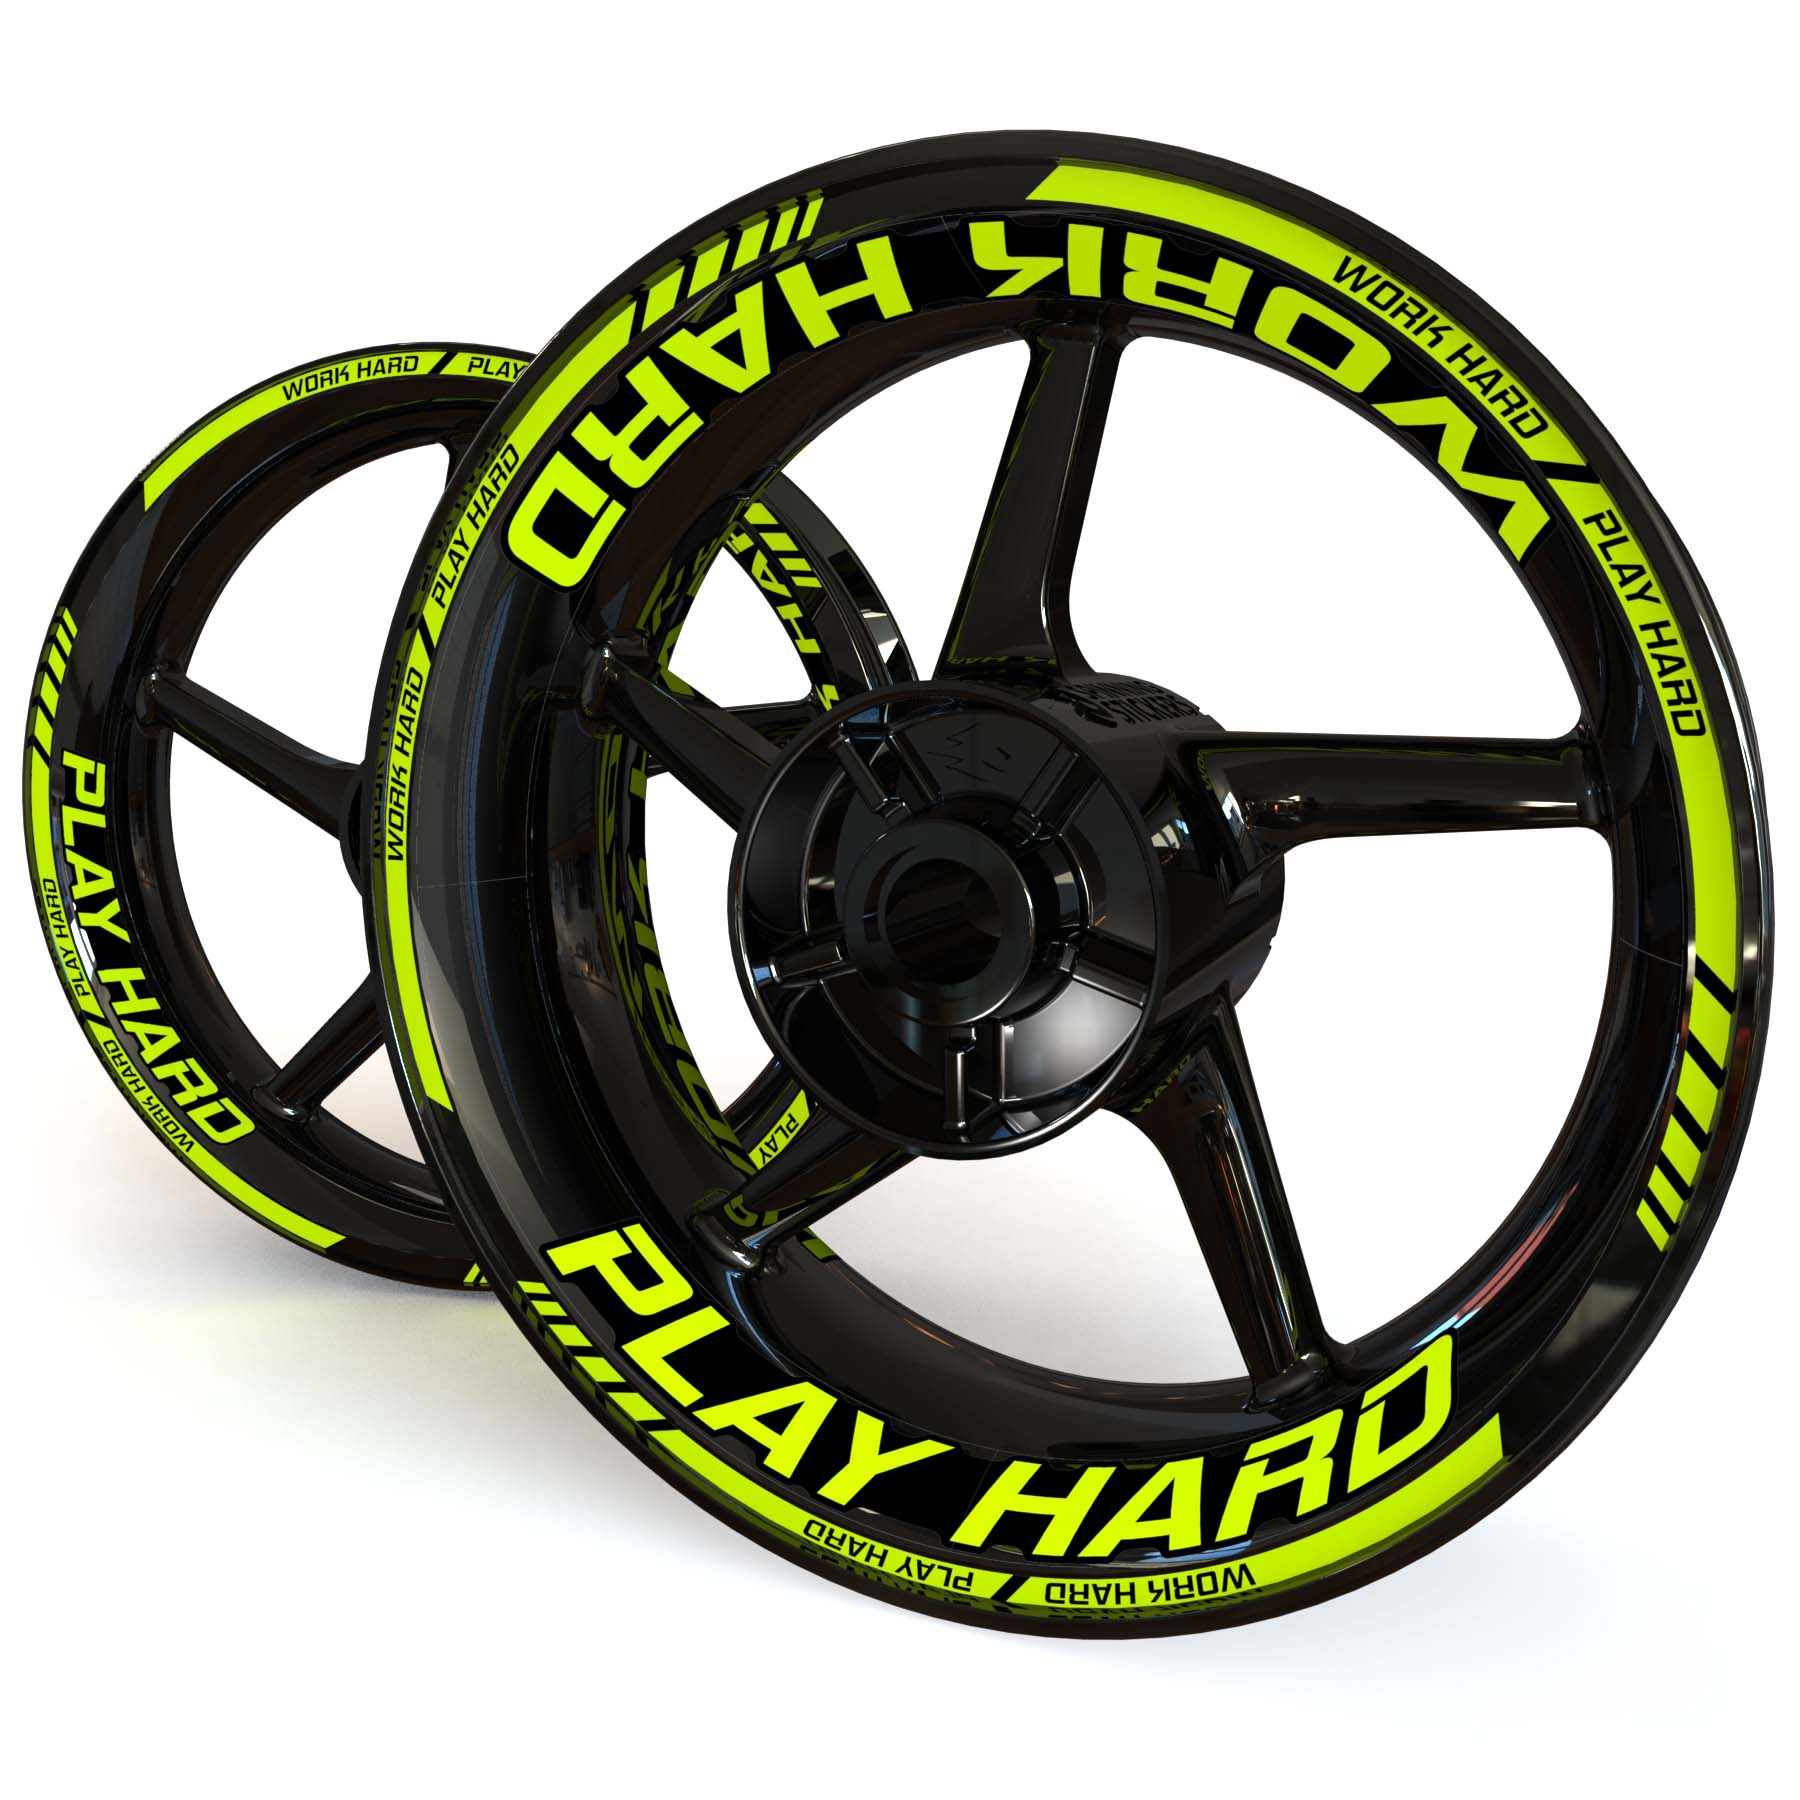 Wheel Stickers - "Work Hard, Play Hard" Standard design